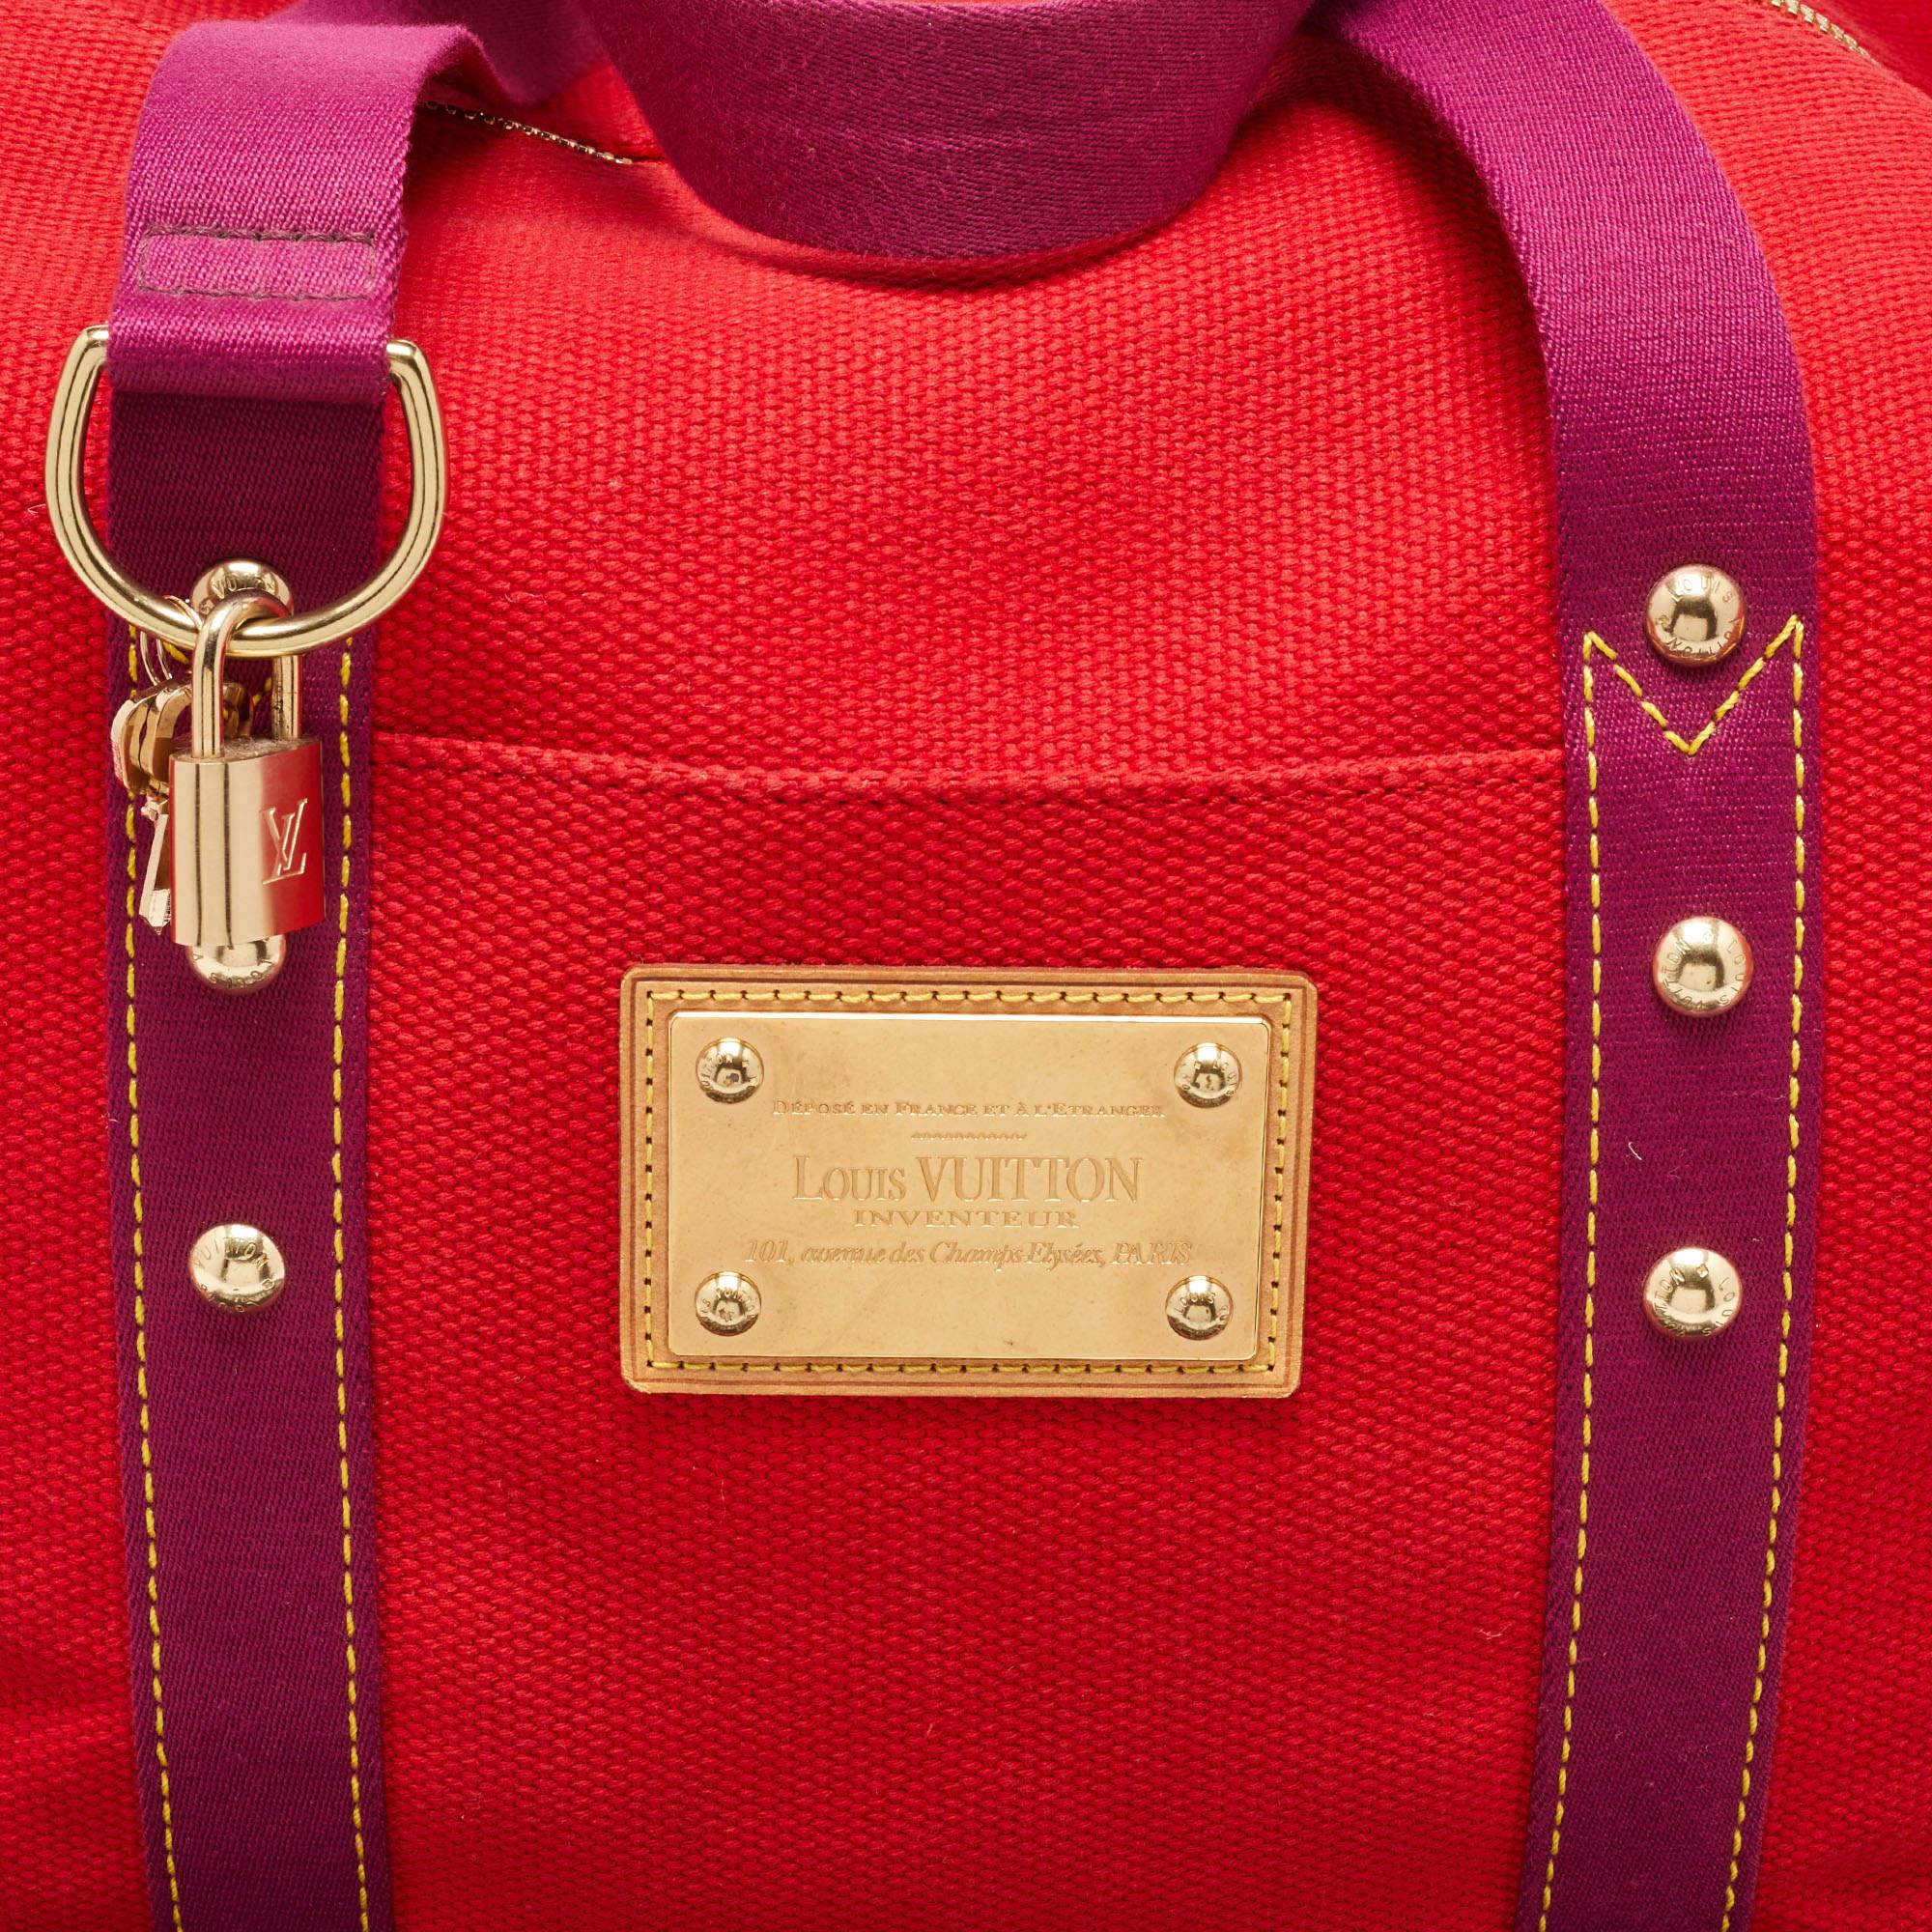 Louis Vuitton Rouge Toile Canvas Antigua Sac Weekend Bag 3